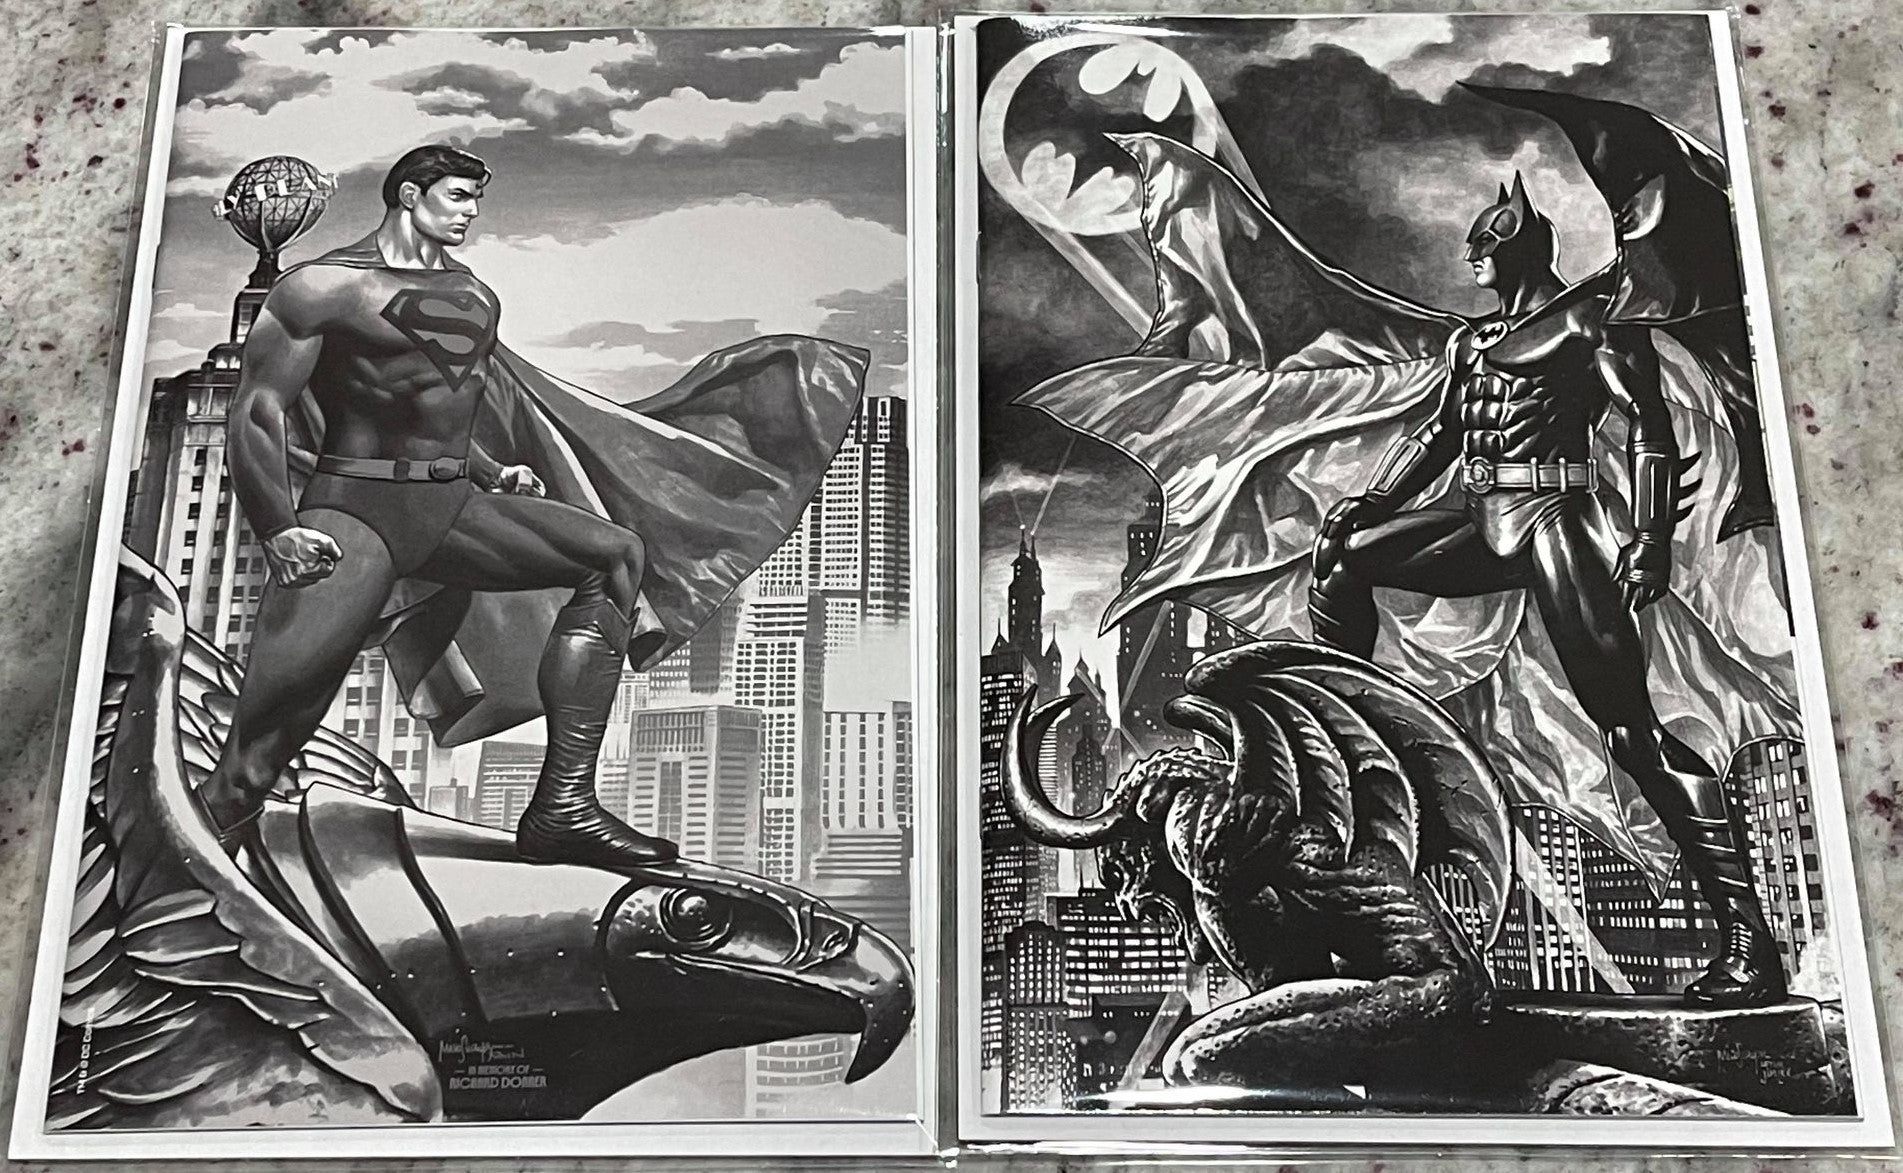 BATMAN 89 #1 & SUPERMAN 78 #1 MICO SUAYAN CONVENTION EXCLUSIVE VARIANT SET WITH COLLECTOR' BOX